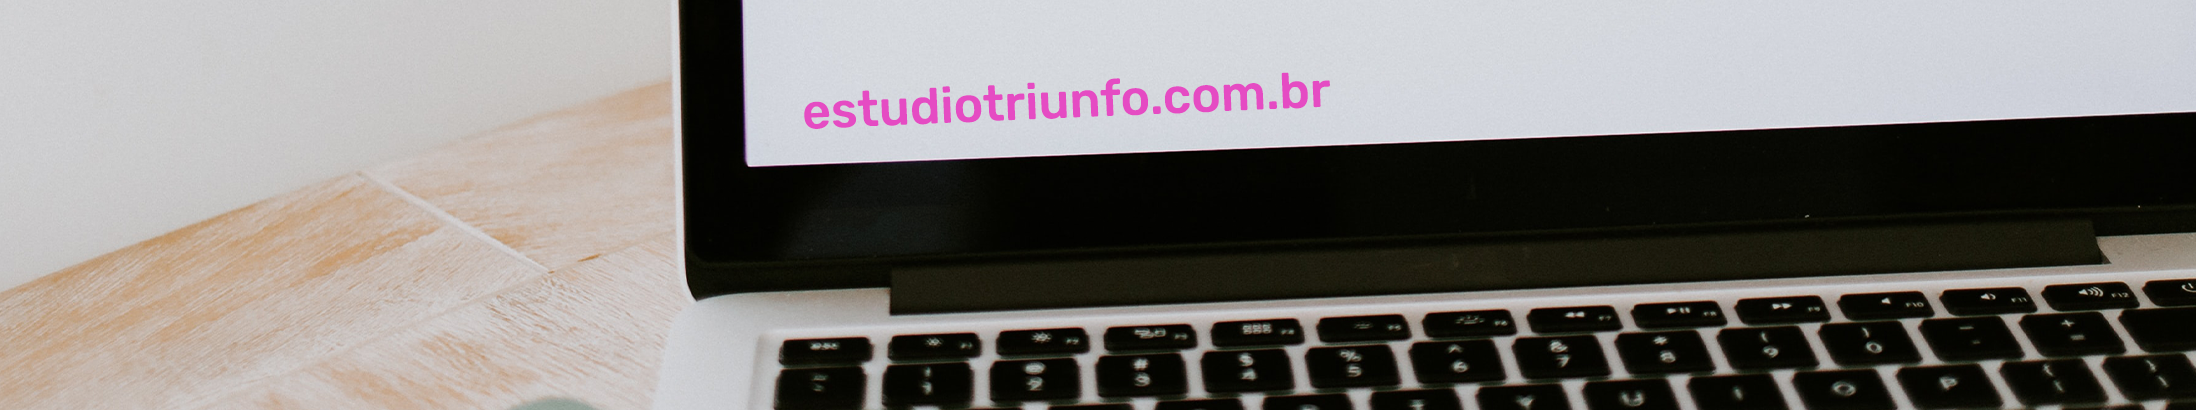 Triunfo Estudio Digital profil başlığı